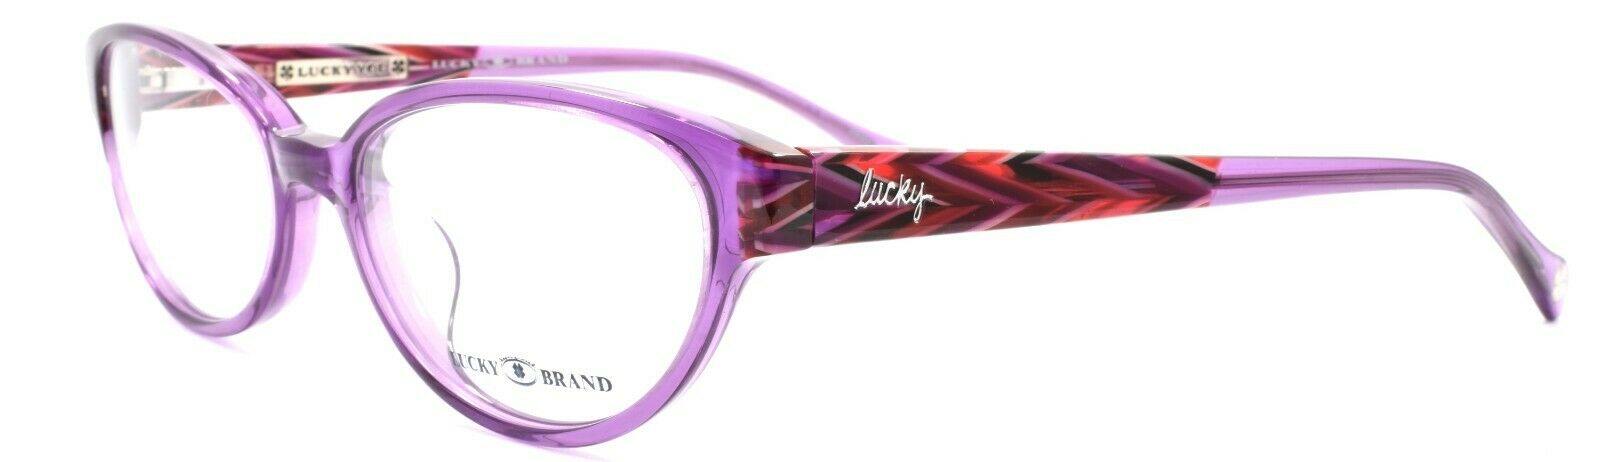 1-LUCKY BRAND Sunrise UF Women's Eyeglasses Frames 52-17-140 Purple + CASE-751286256628-IKSpecs